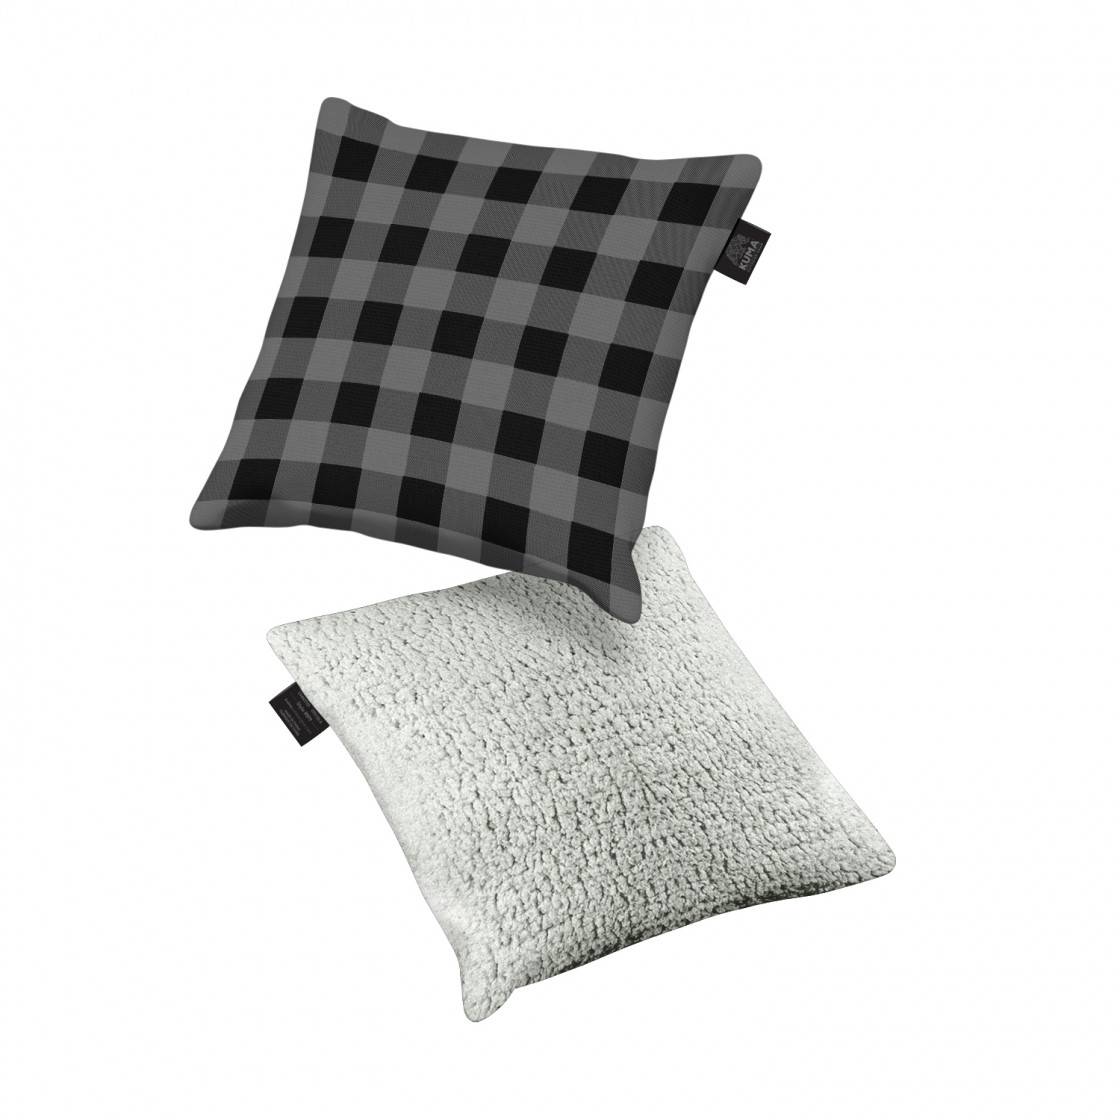 Kuma 858-KM-SDP-GPB Square Decor Pillow - Grey Plaid